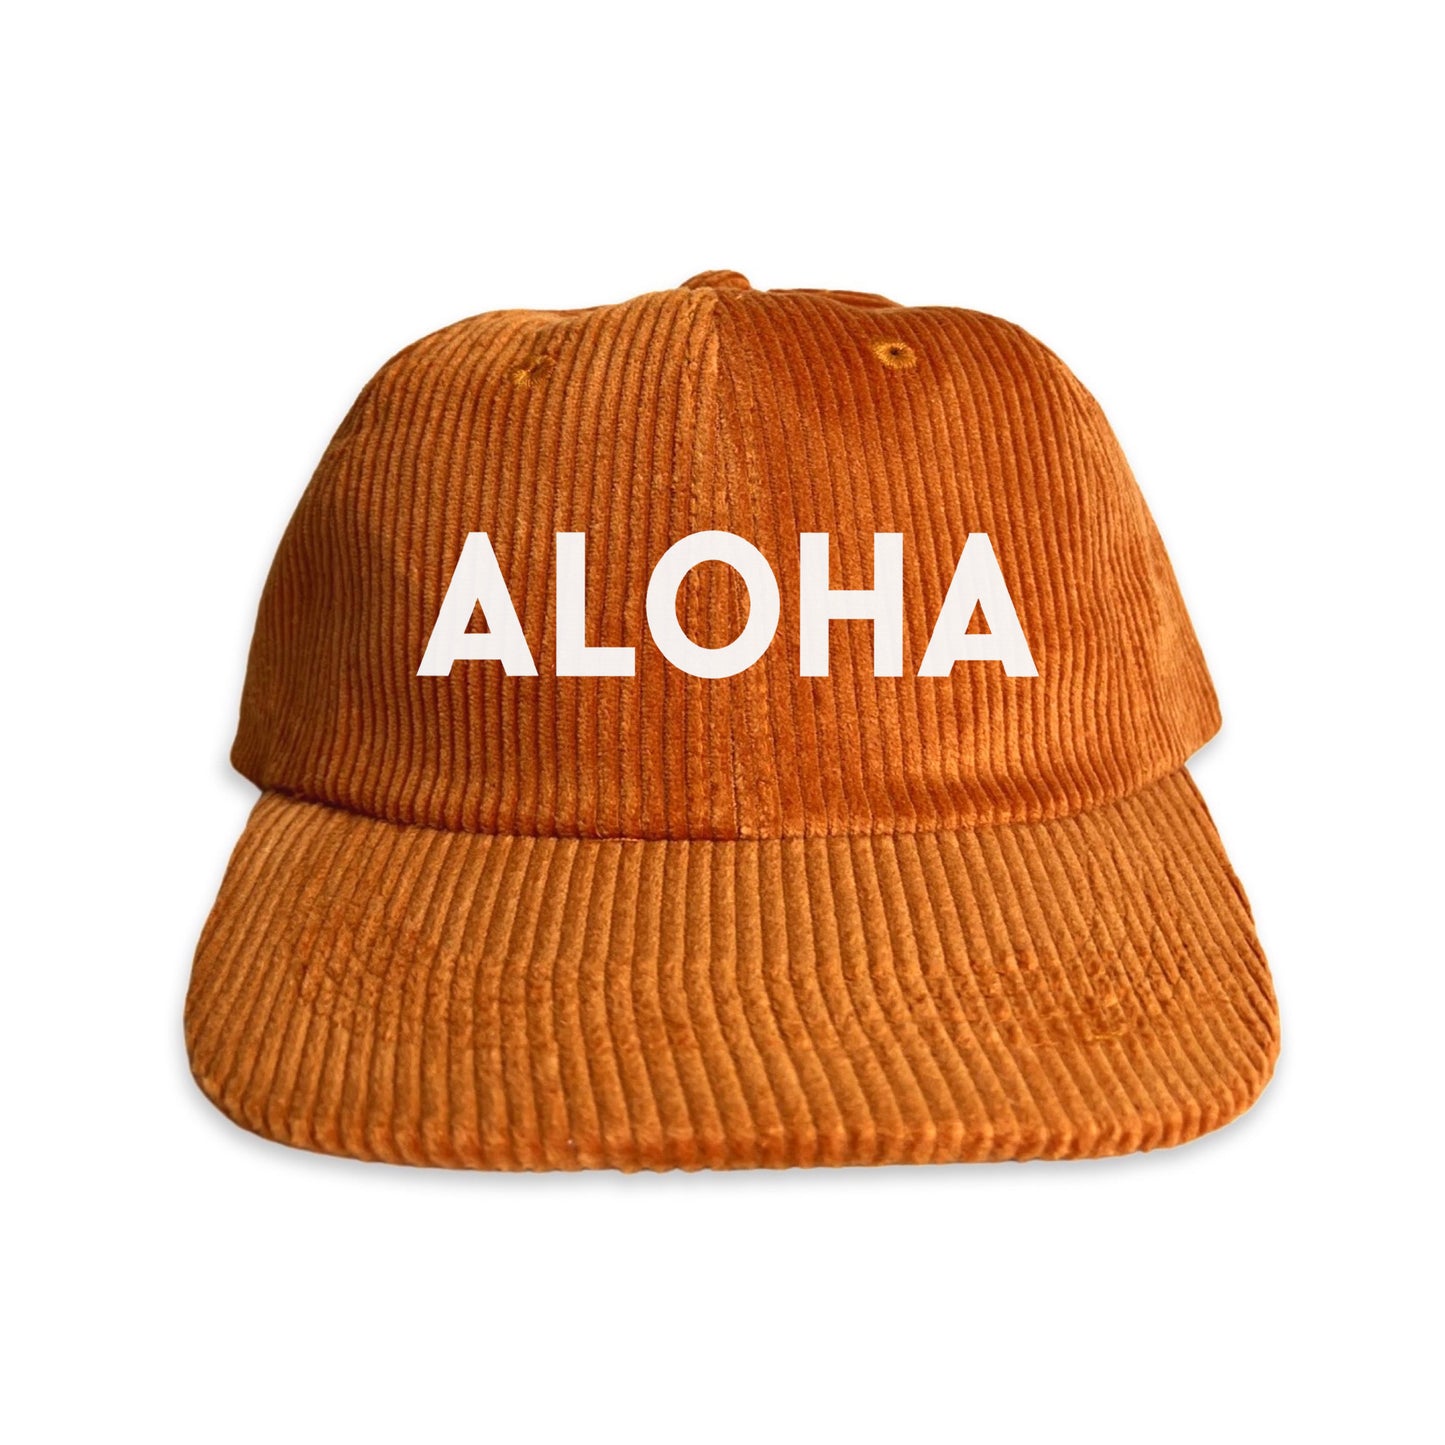 Aloha Corduroy Cap